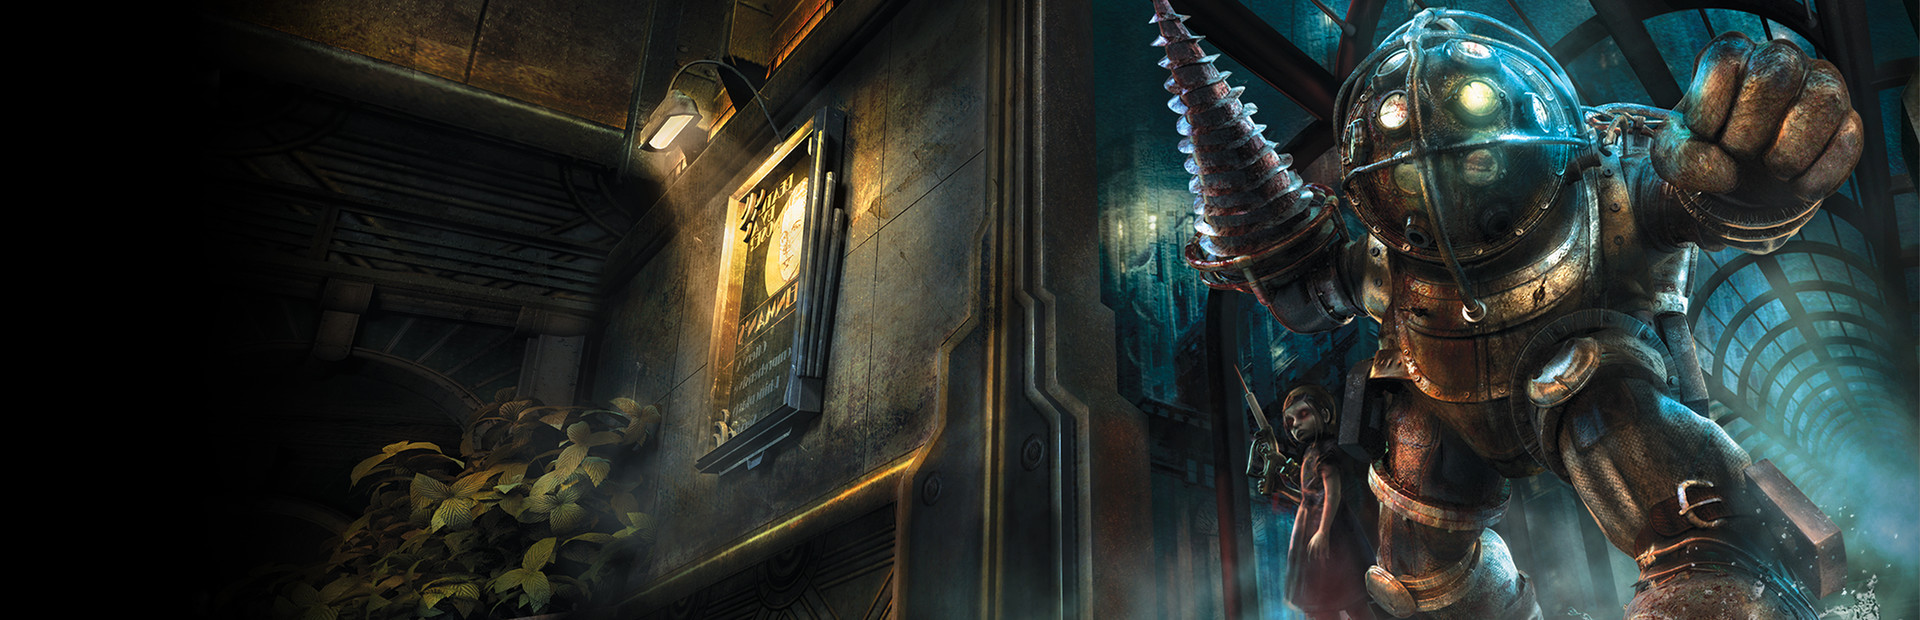 BioShock™ cover image